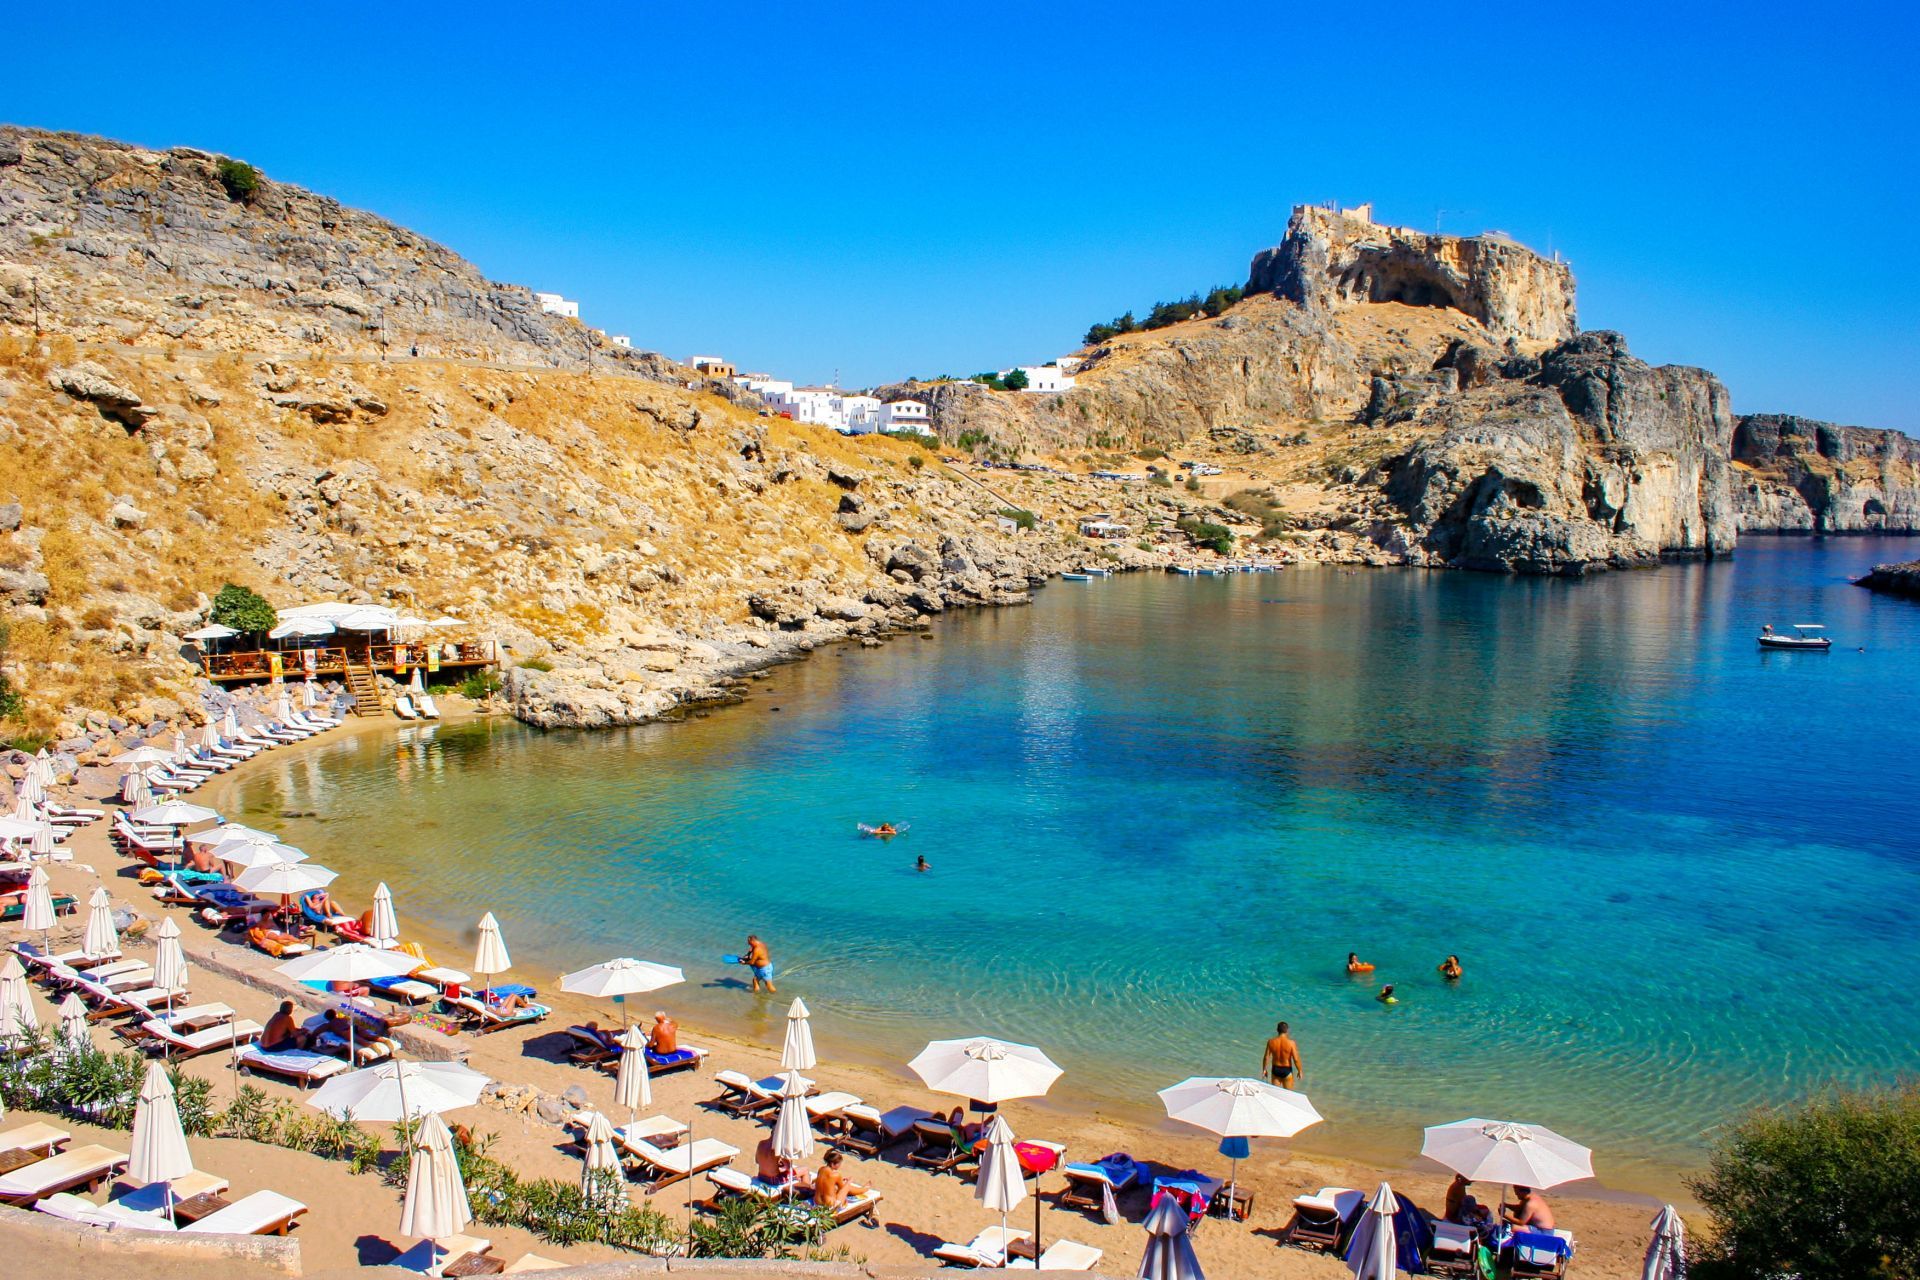 The beach of Agios Pavlos in Lindos